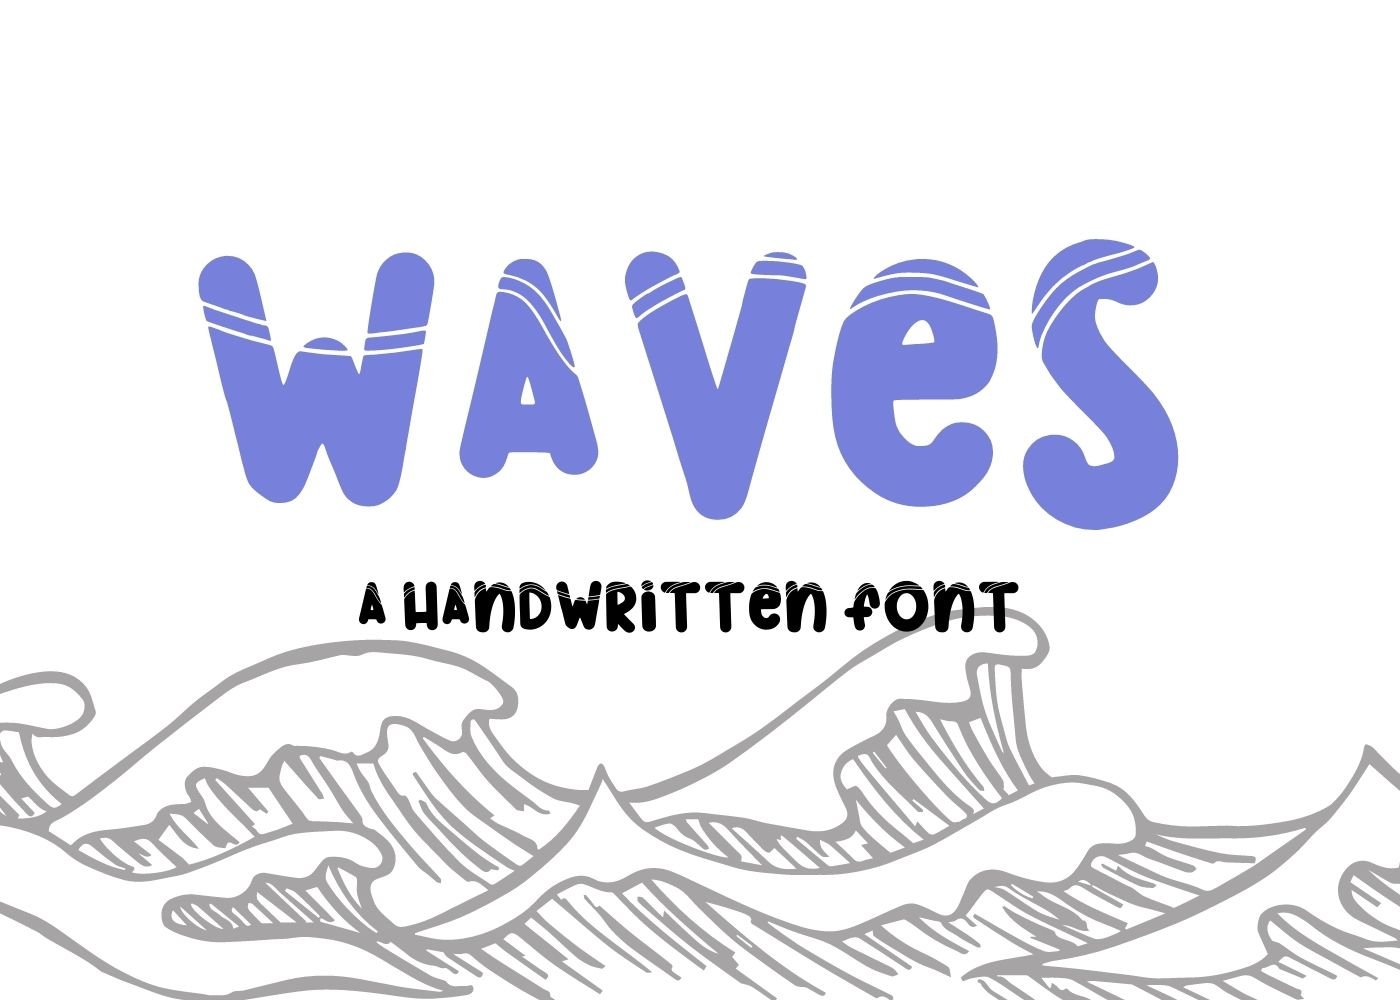 Waves Handwritten Bubble Font cover image.